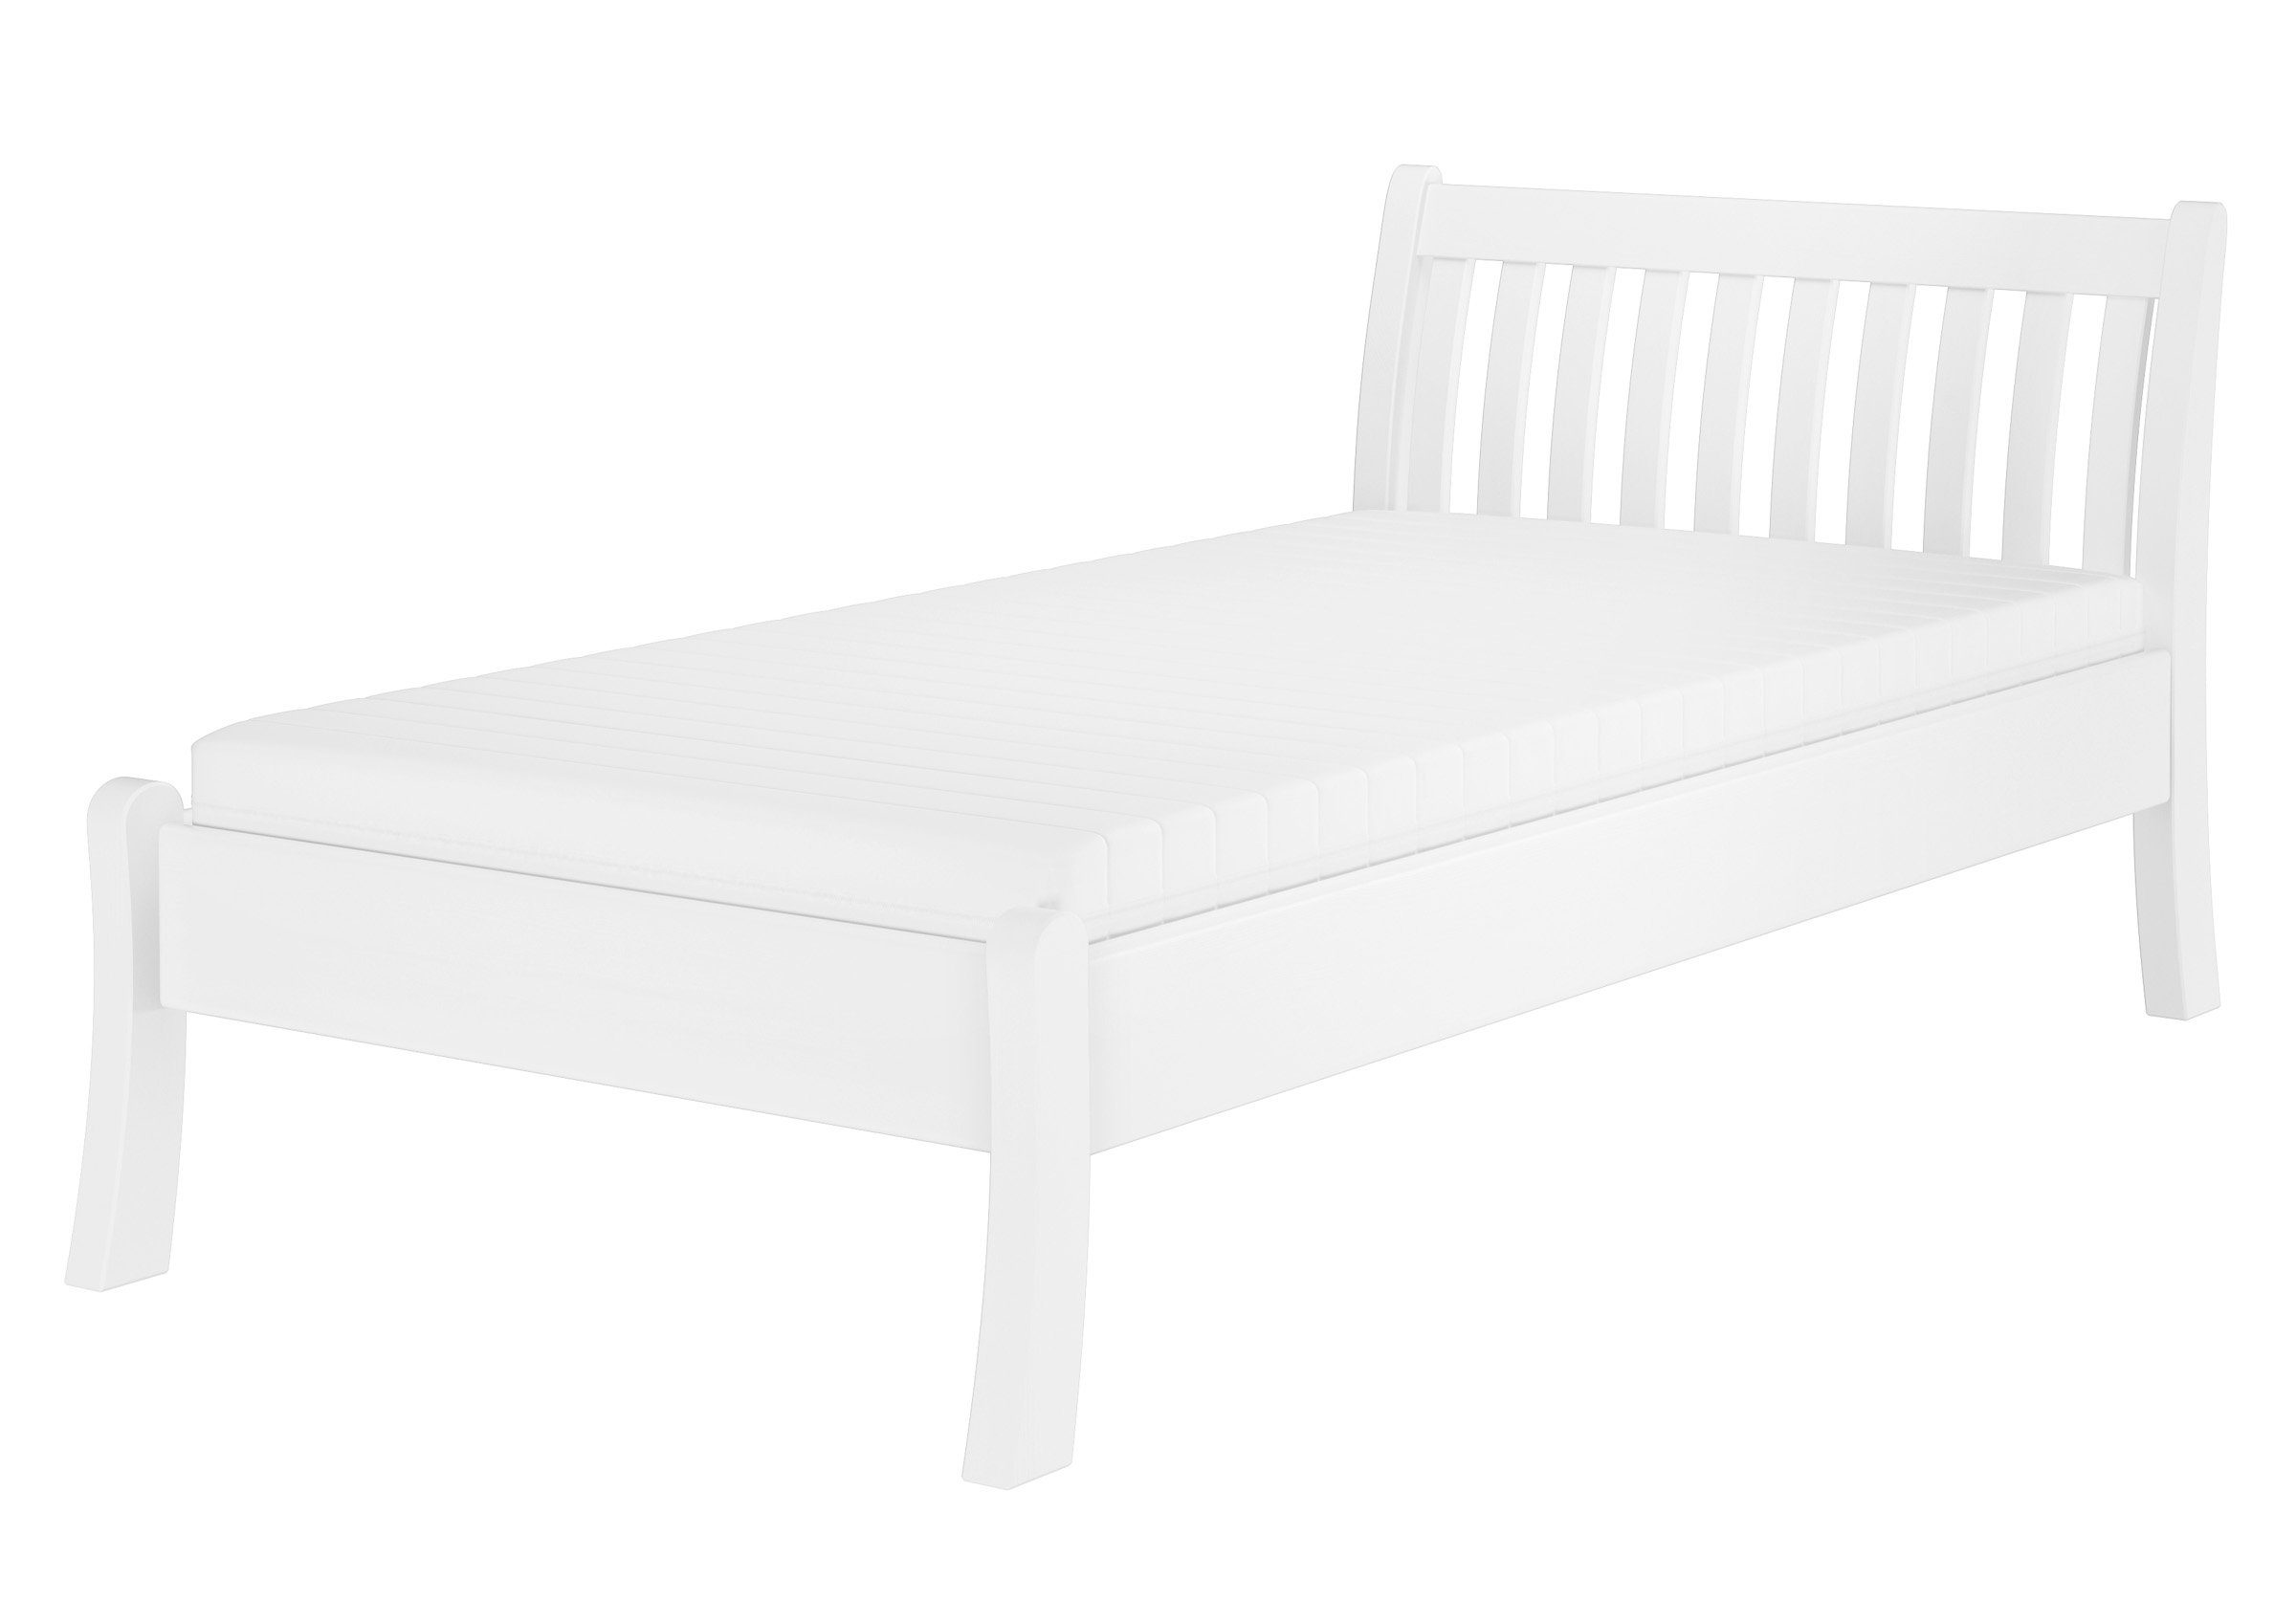 ERST-HOLZ Bett Einzelbett hohe Sitzkante Kiefer weiß 100x200 cm, Kieferwaschweiß